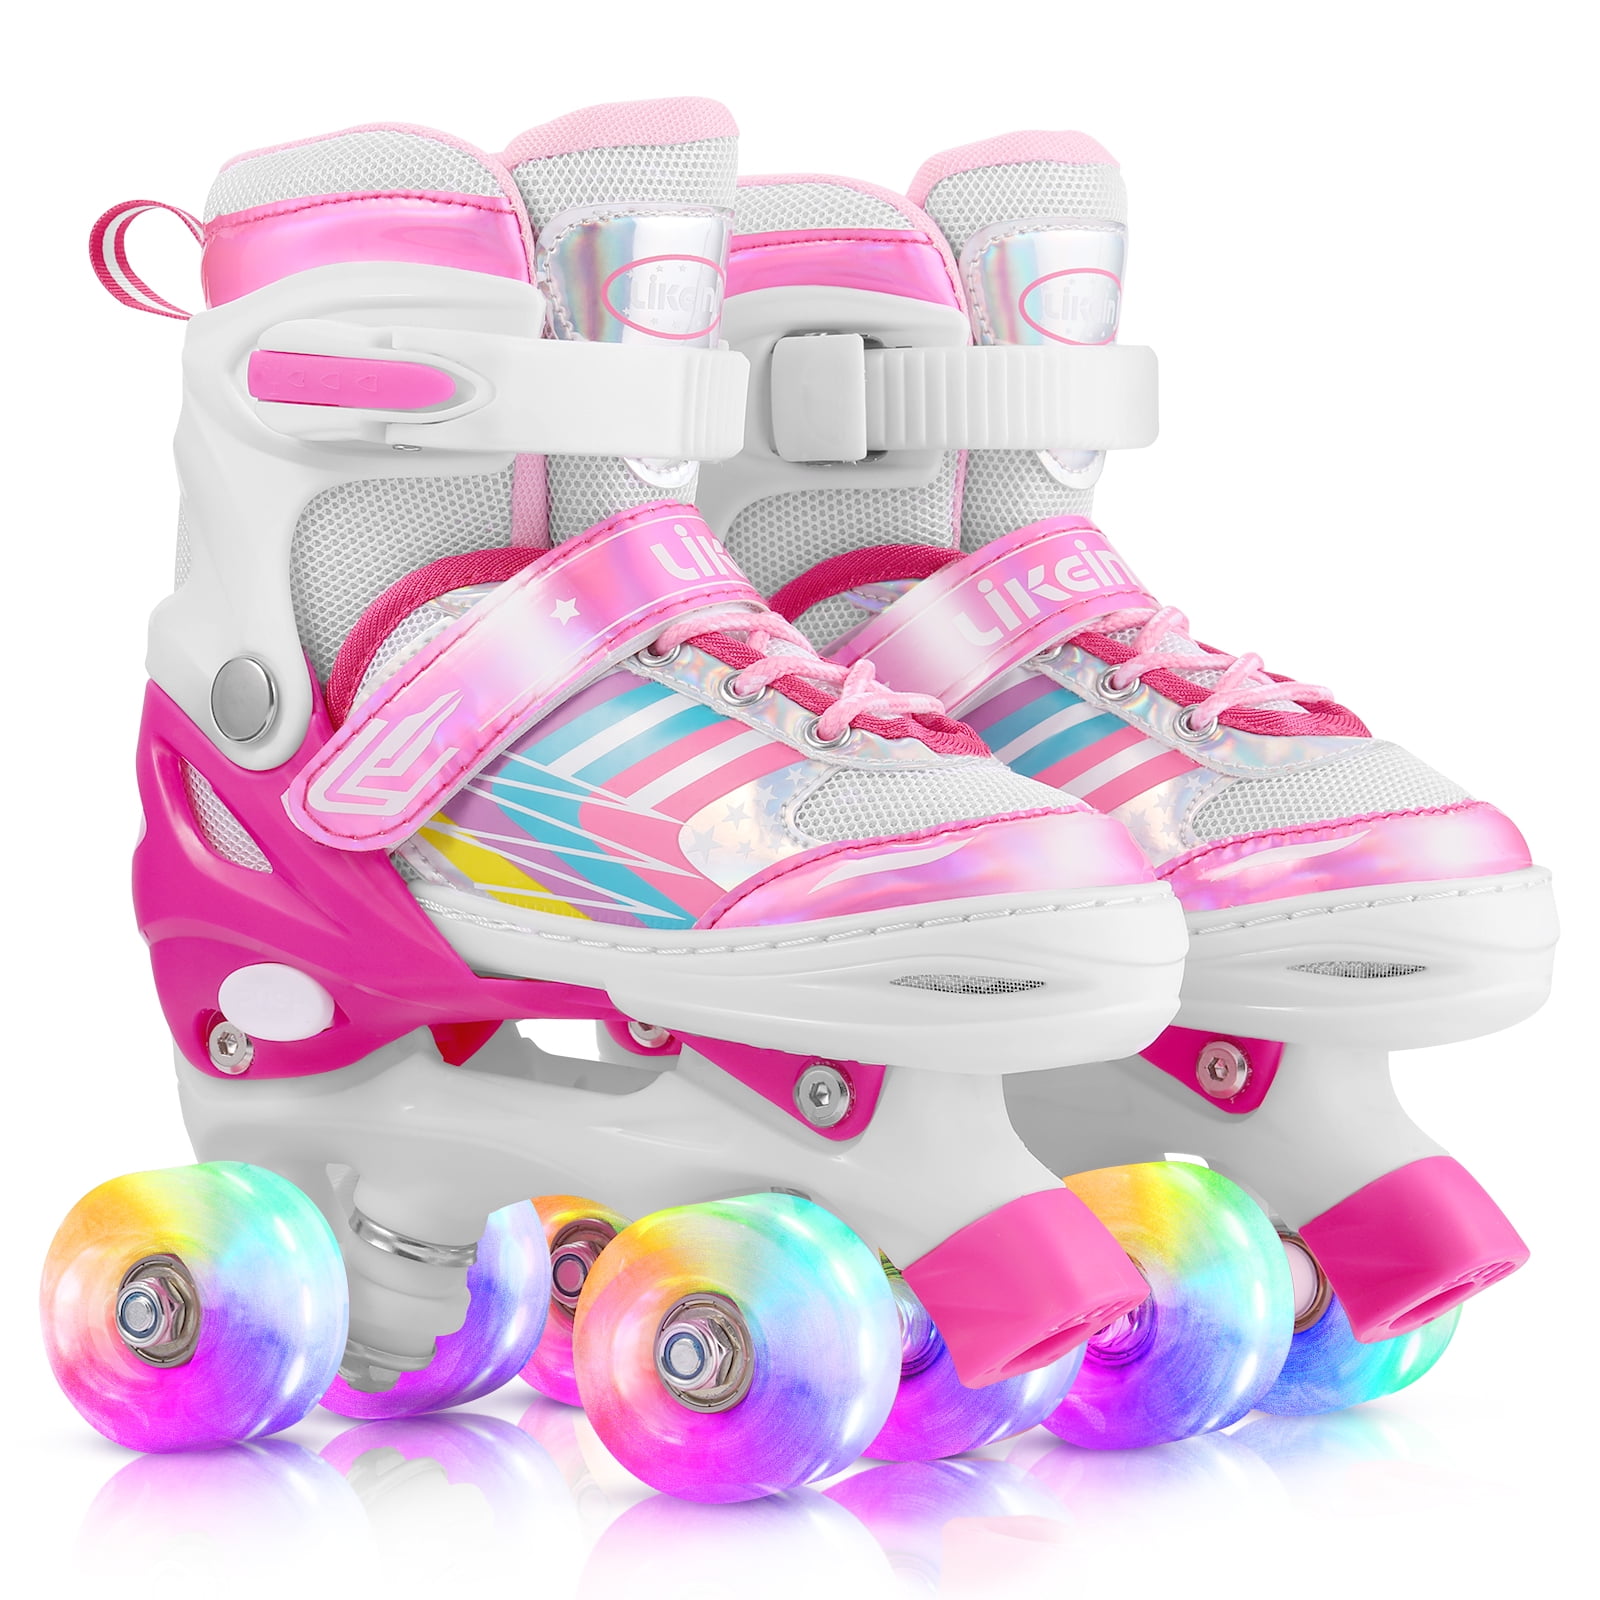 Details about   Sulifeel Rainbow Unicorn 4 Size Adjustable Light up Roller Skates for Girls Boys 